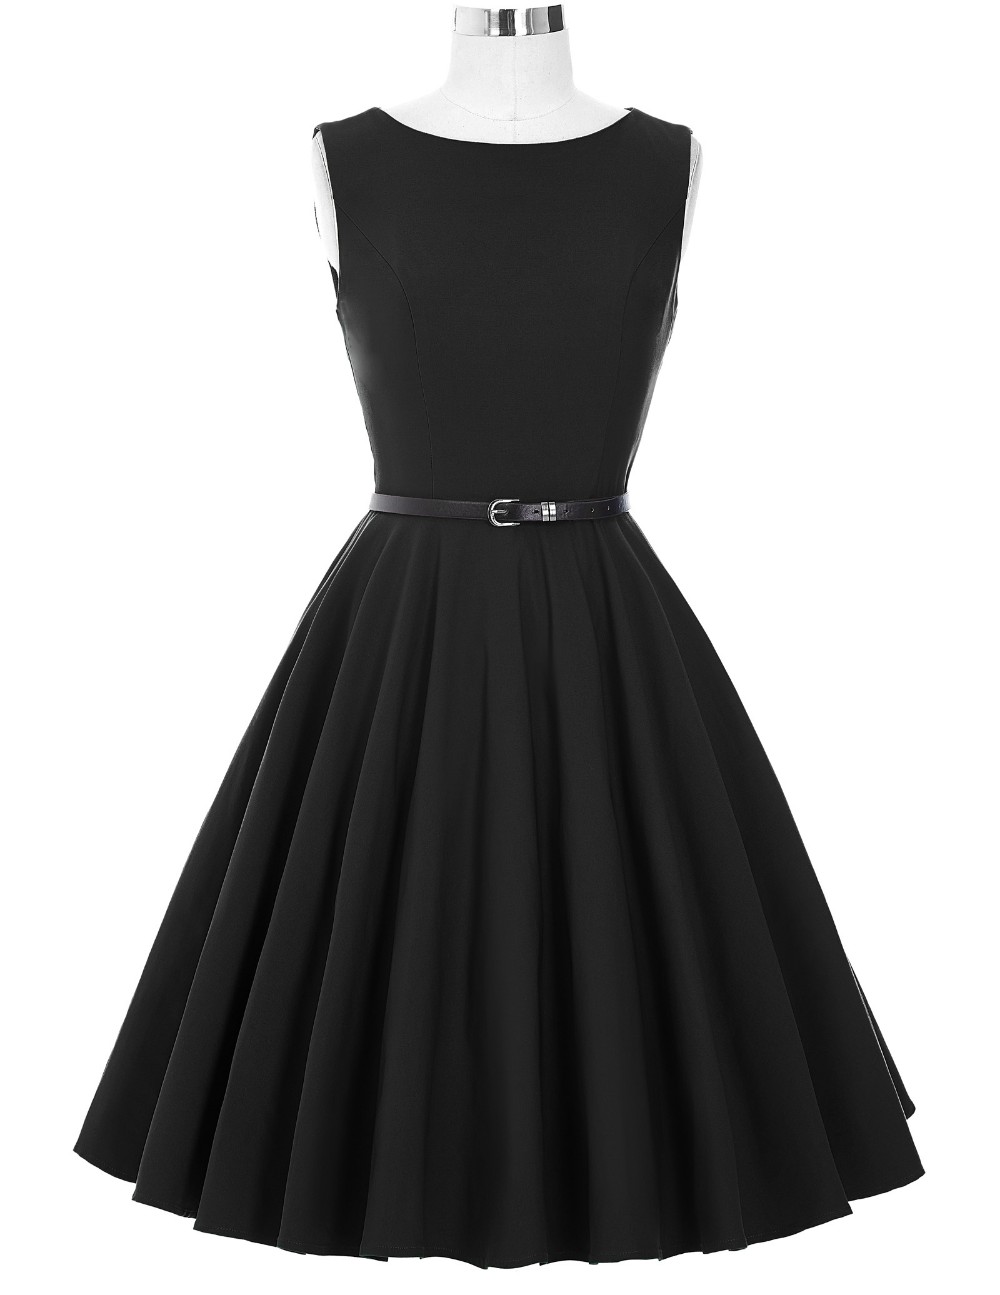 Sleeveless Black Vintage design Party Dress